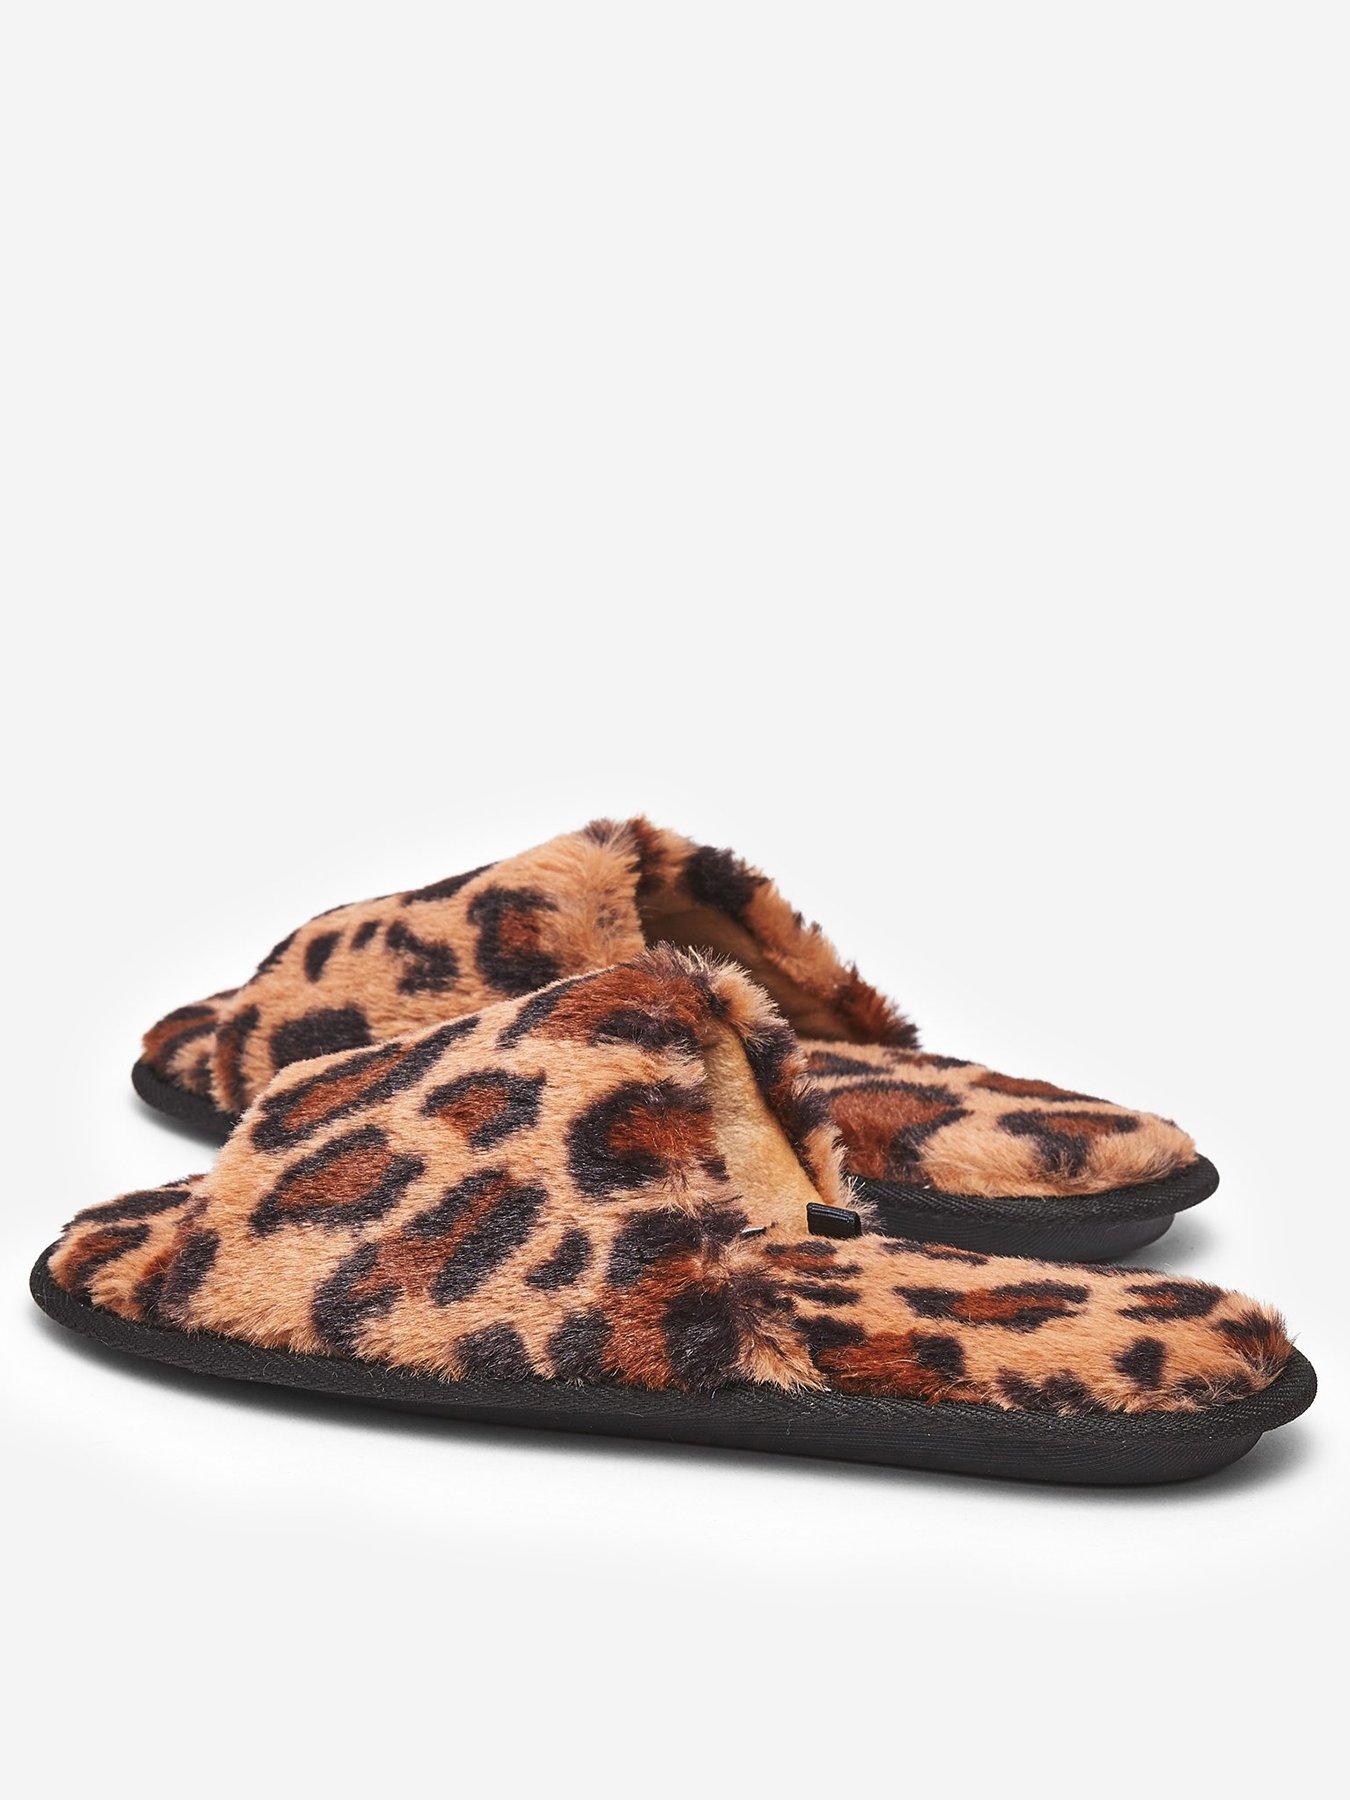 dorothy perkins slippers